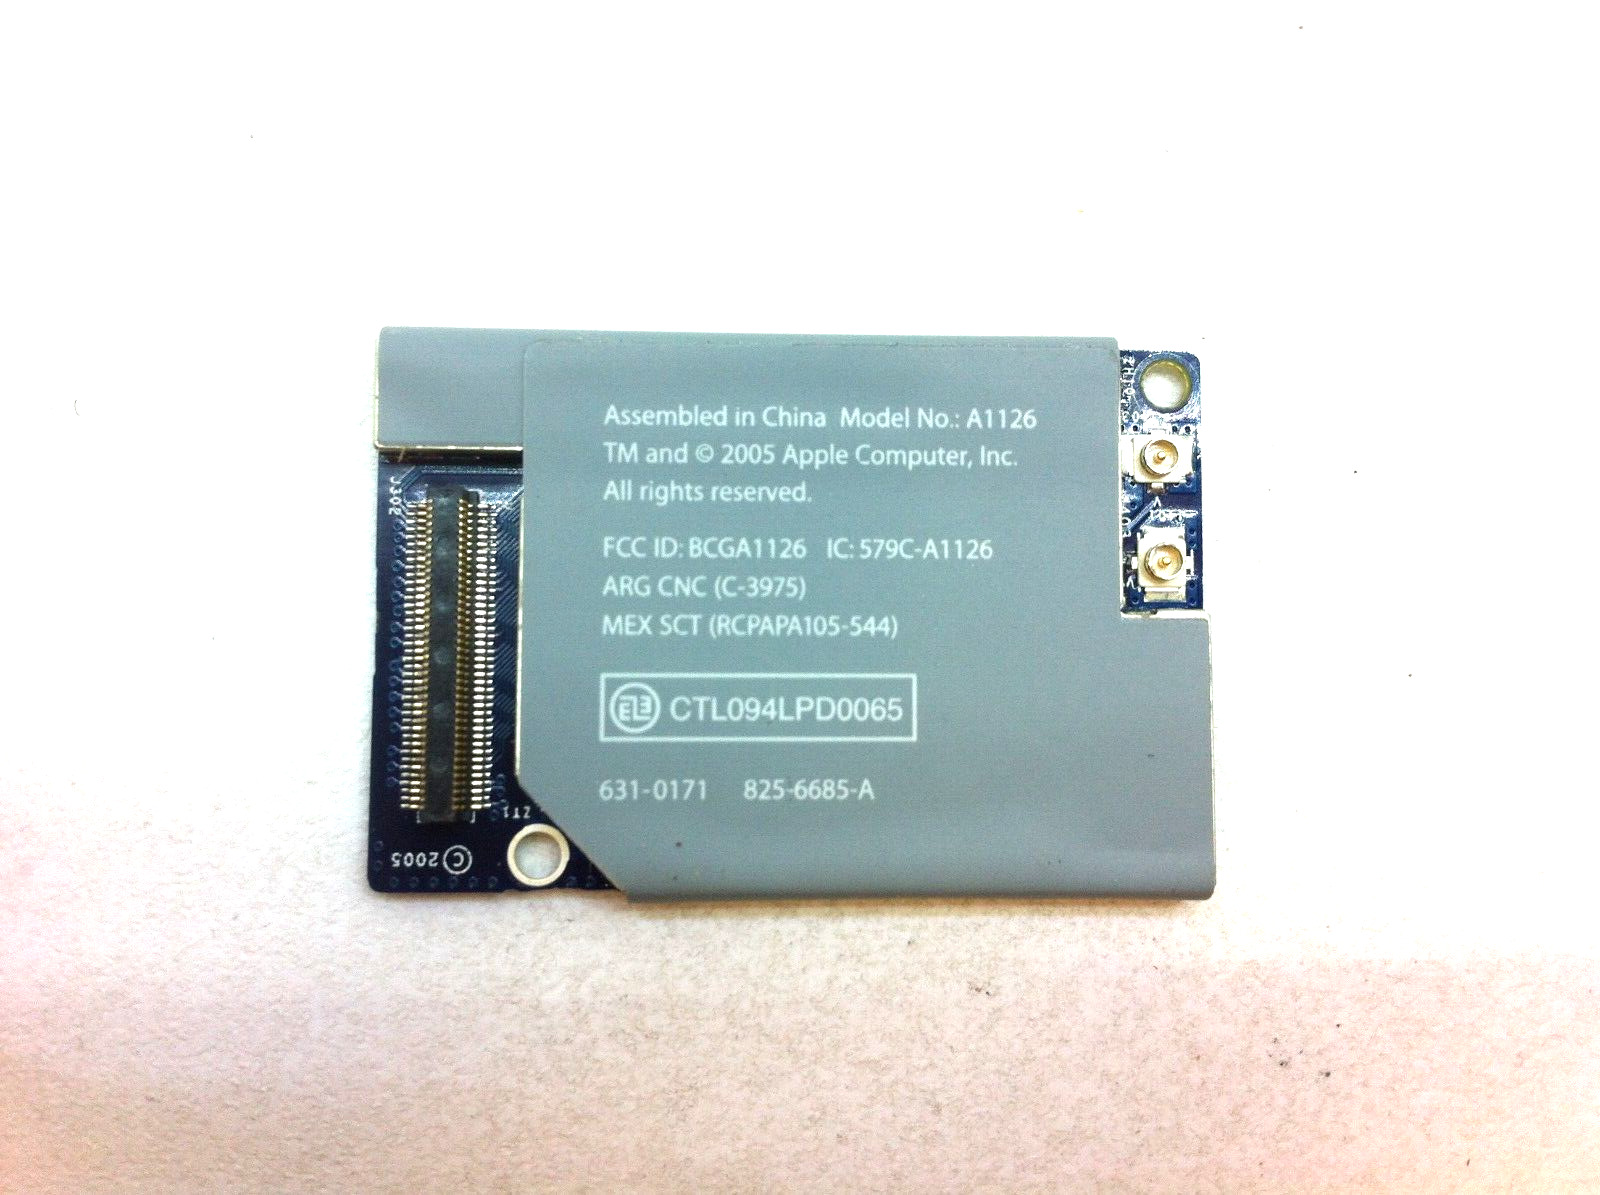 Apple G4 A1133 2005 M9846LL/A Airport Extreme Wifi Bluetooth Card 163